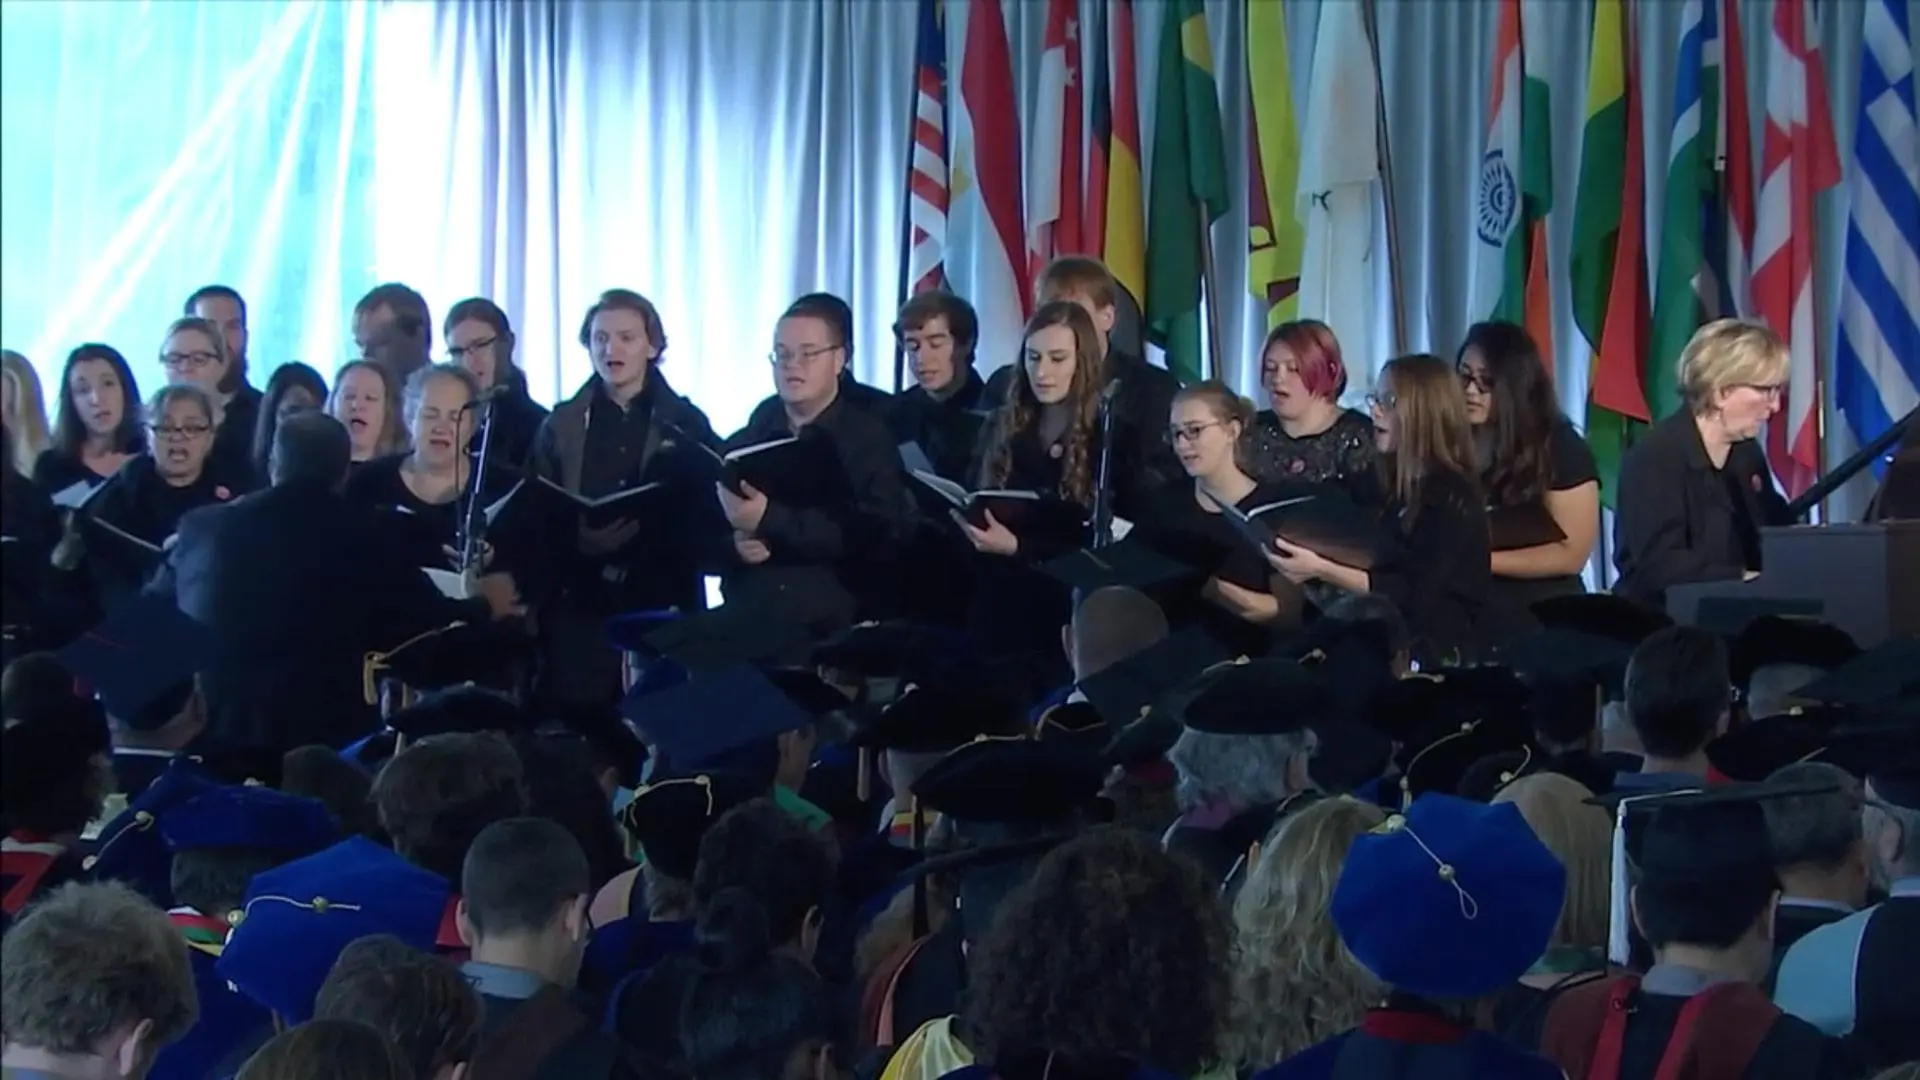 Arcadia University Choir performing